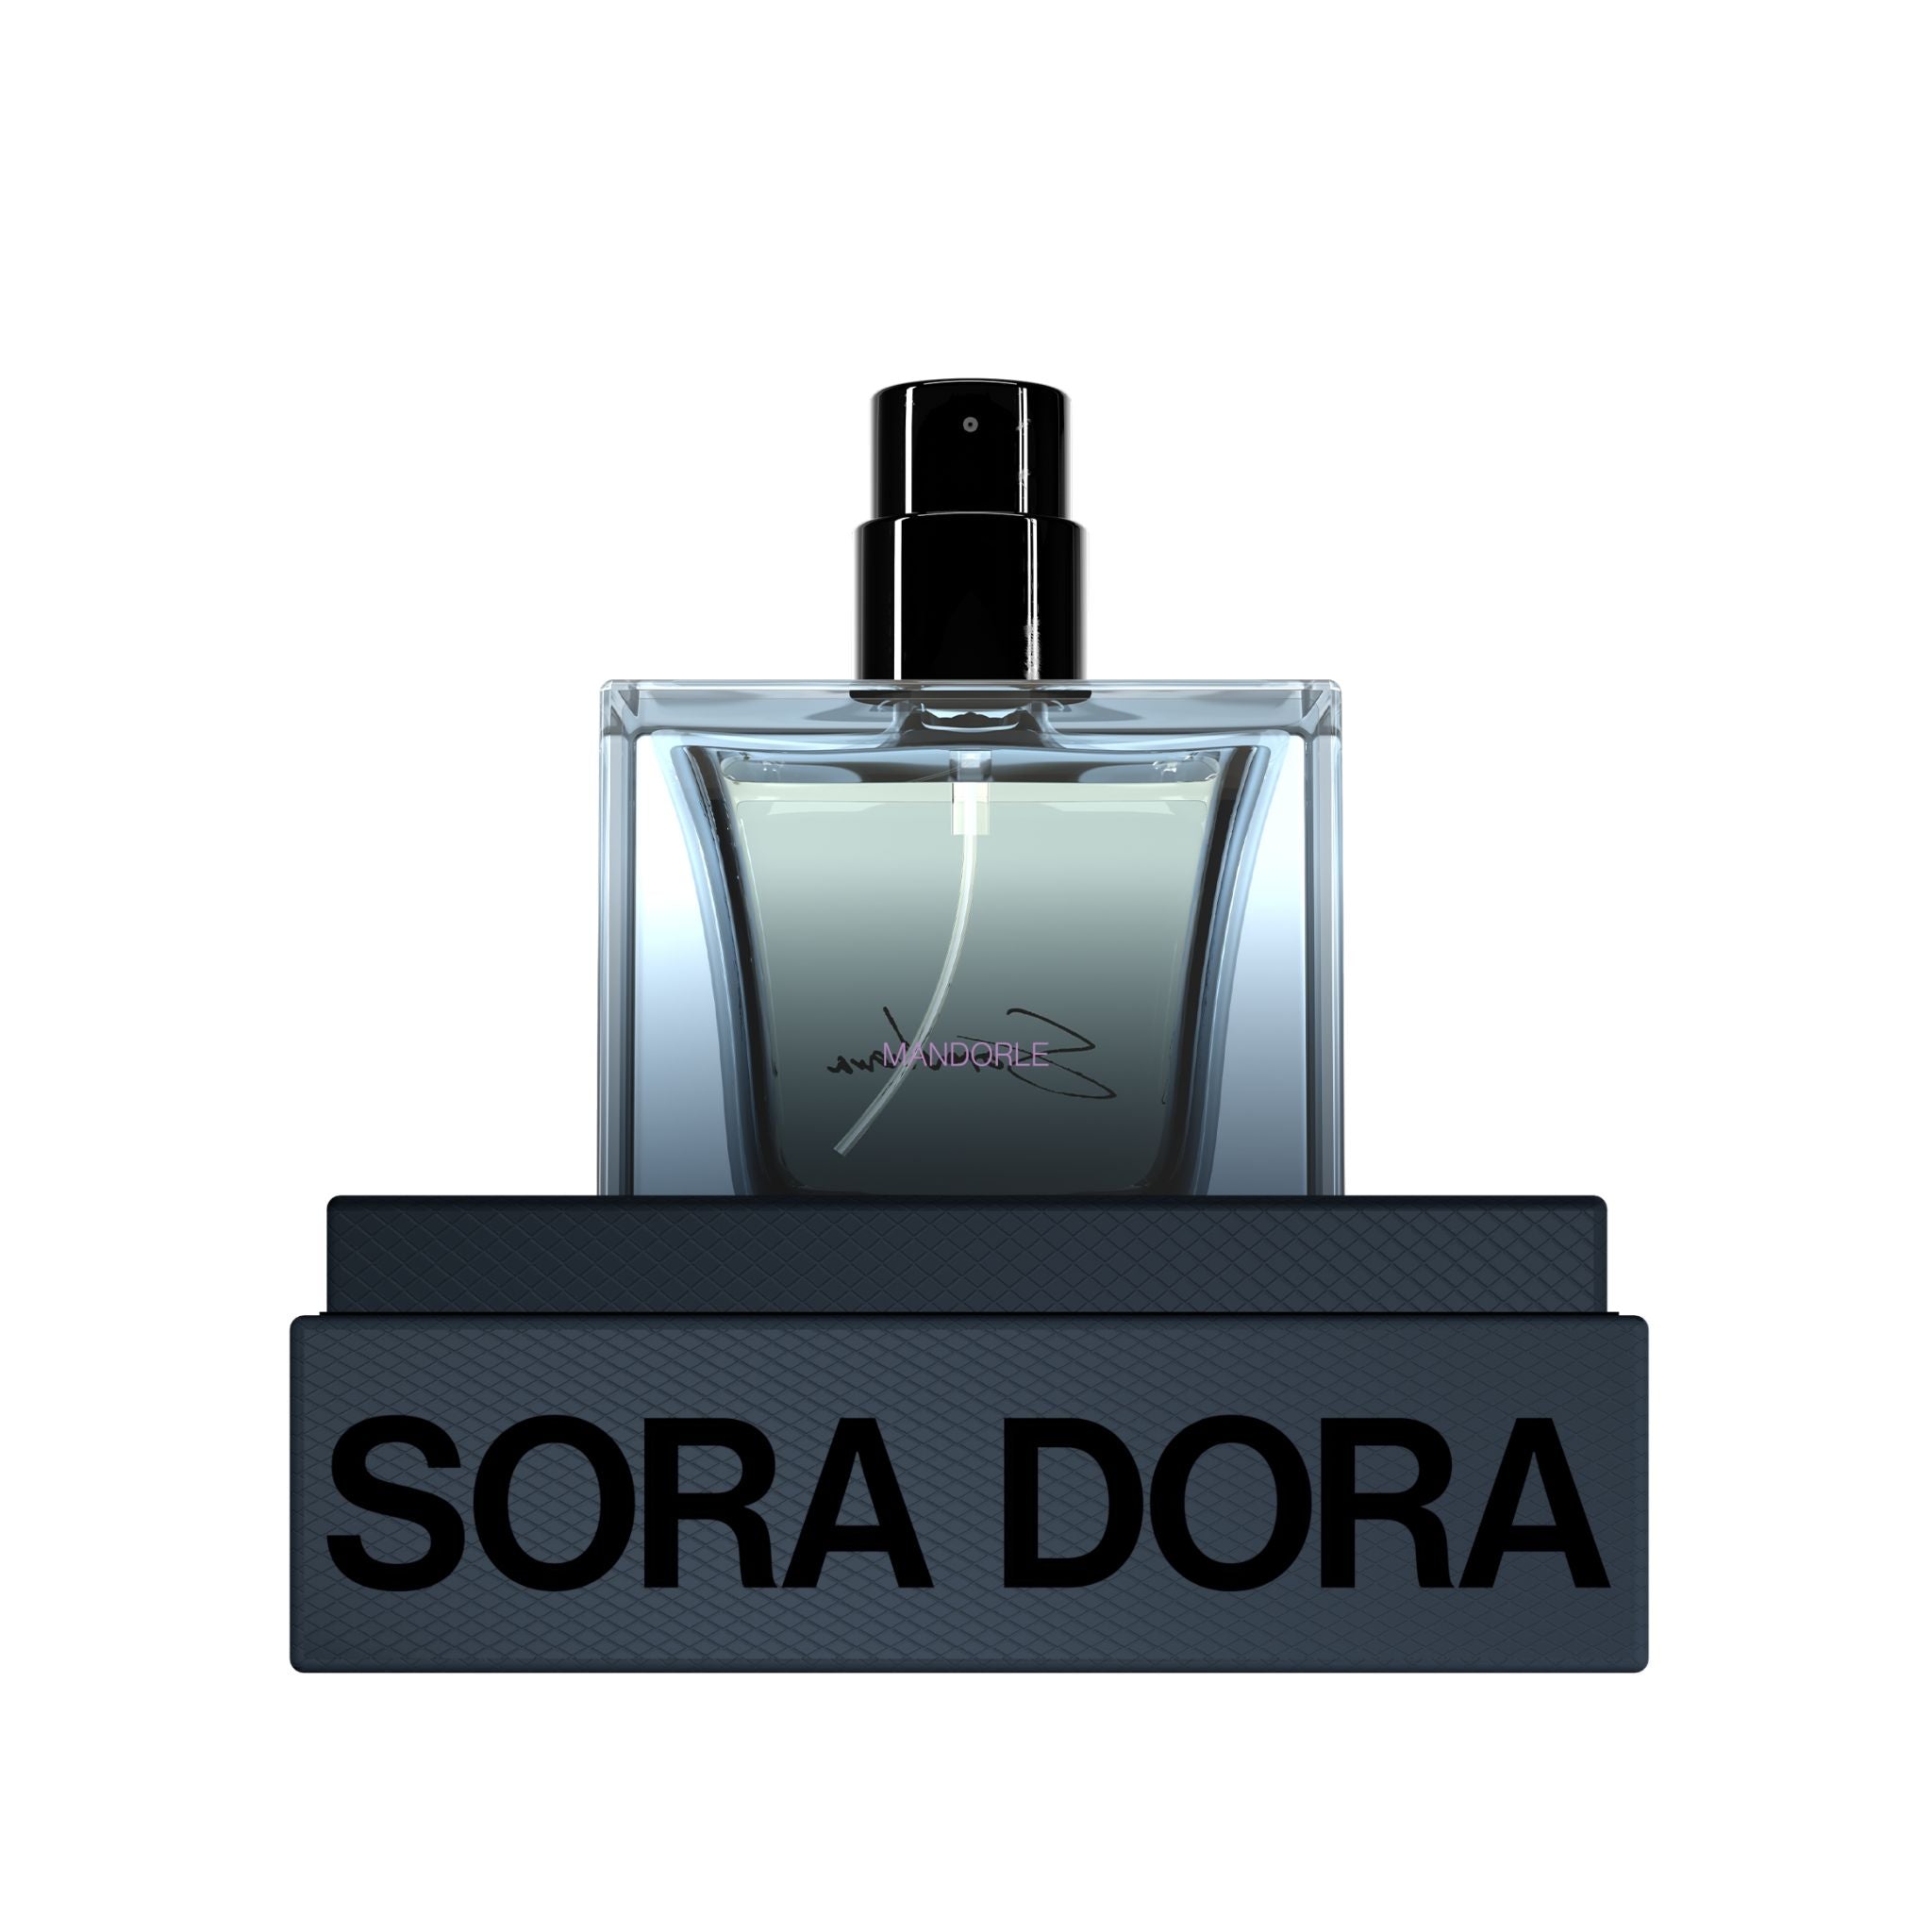 Mandorle Sora Dora Perfume